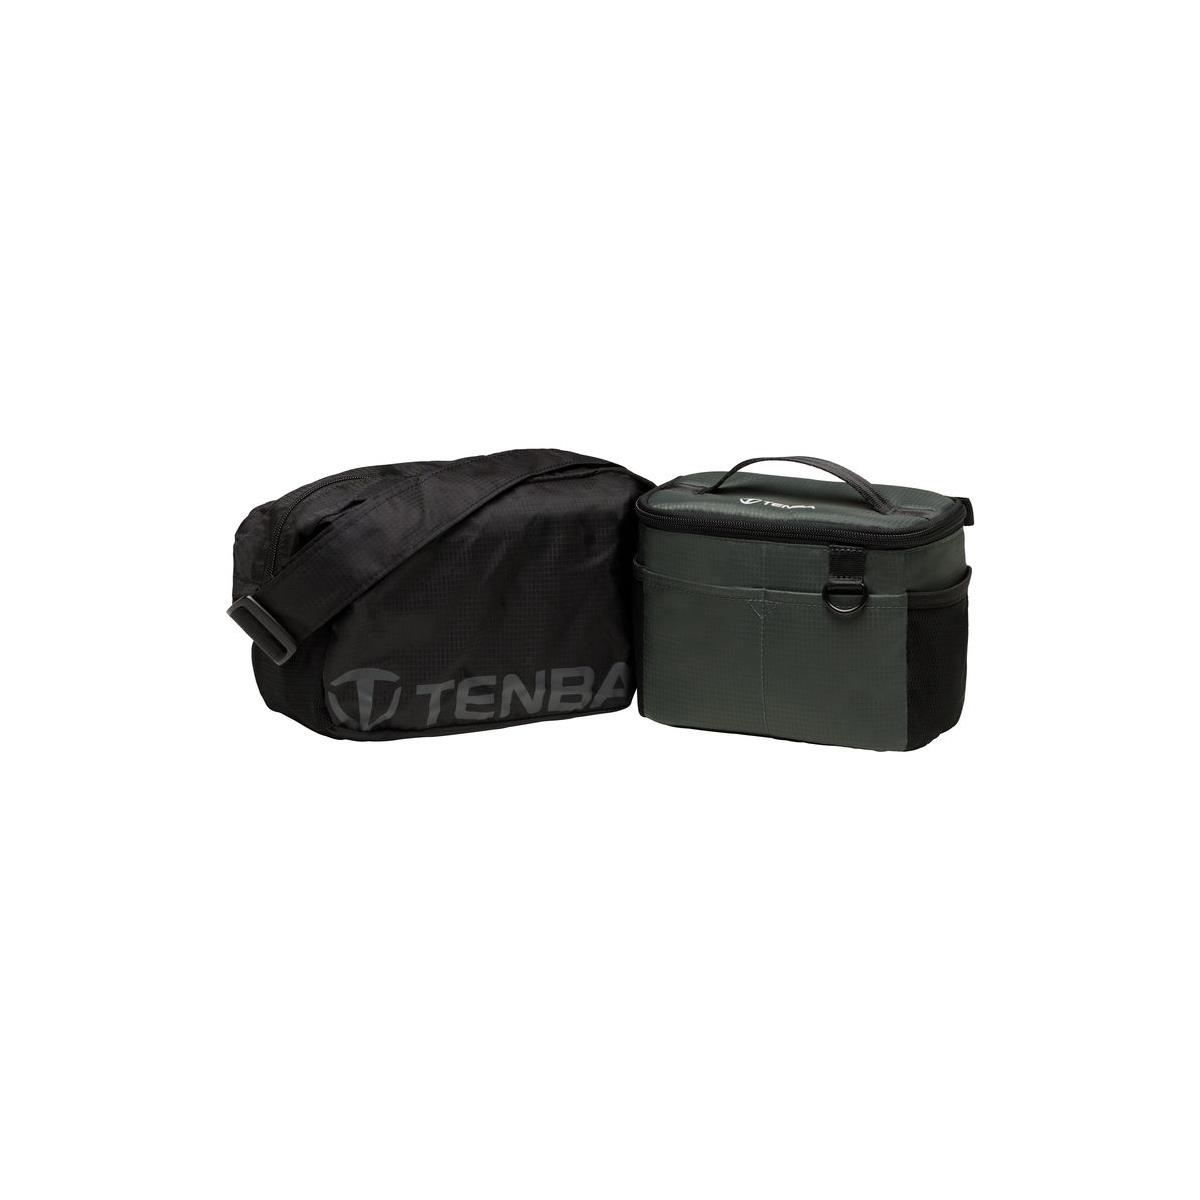 Tenba 636-281 BYOB/Packlite 7 Flatpack  Bundle with Insert and Packlite Bag (Black and Gray)